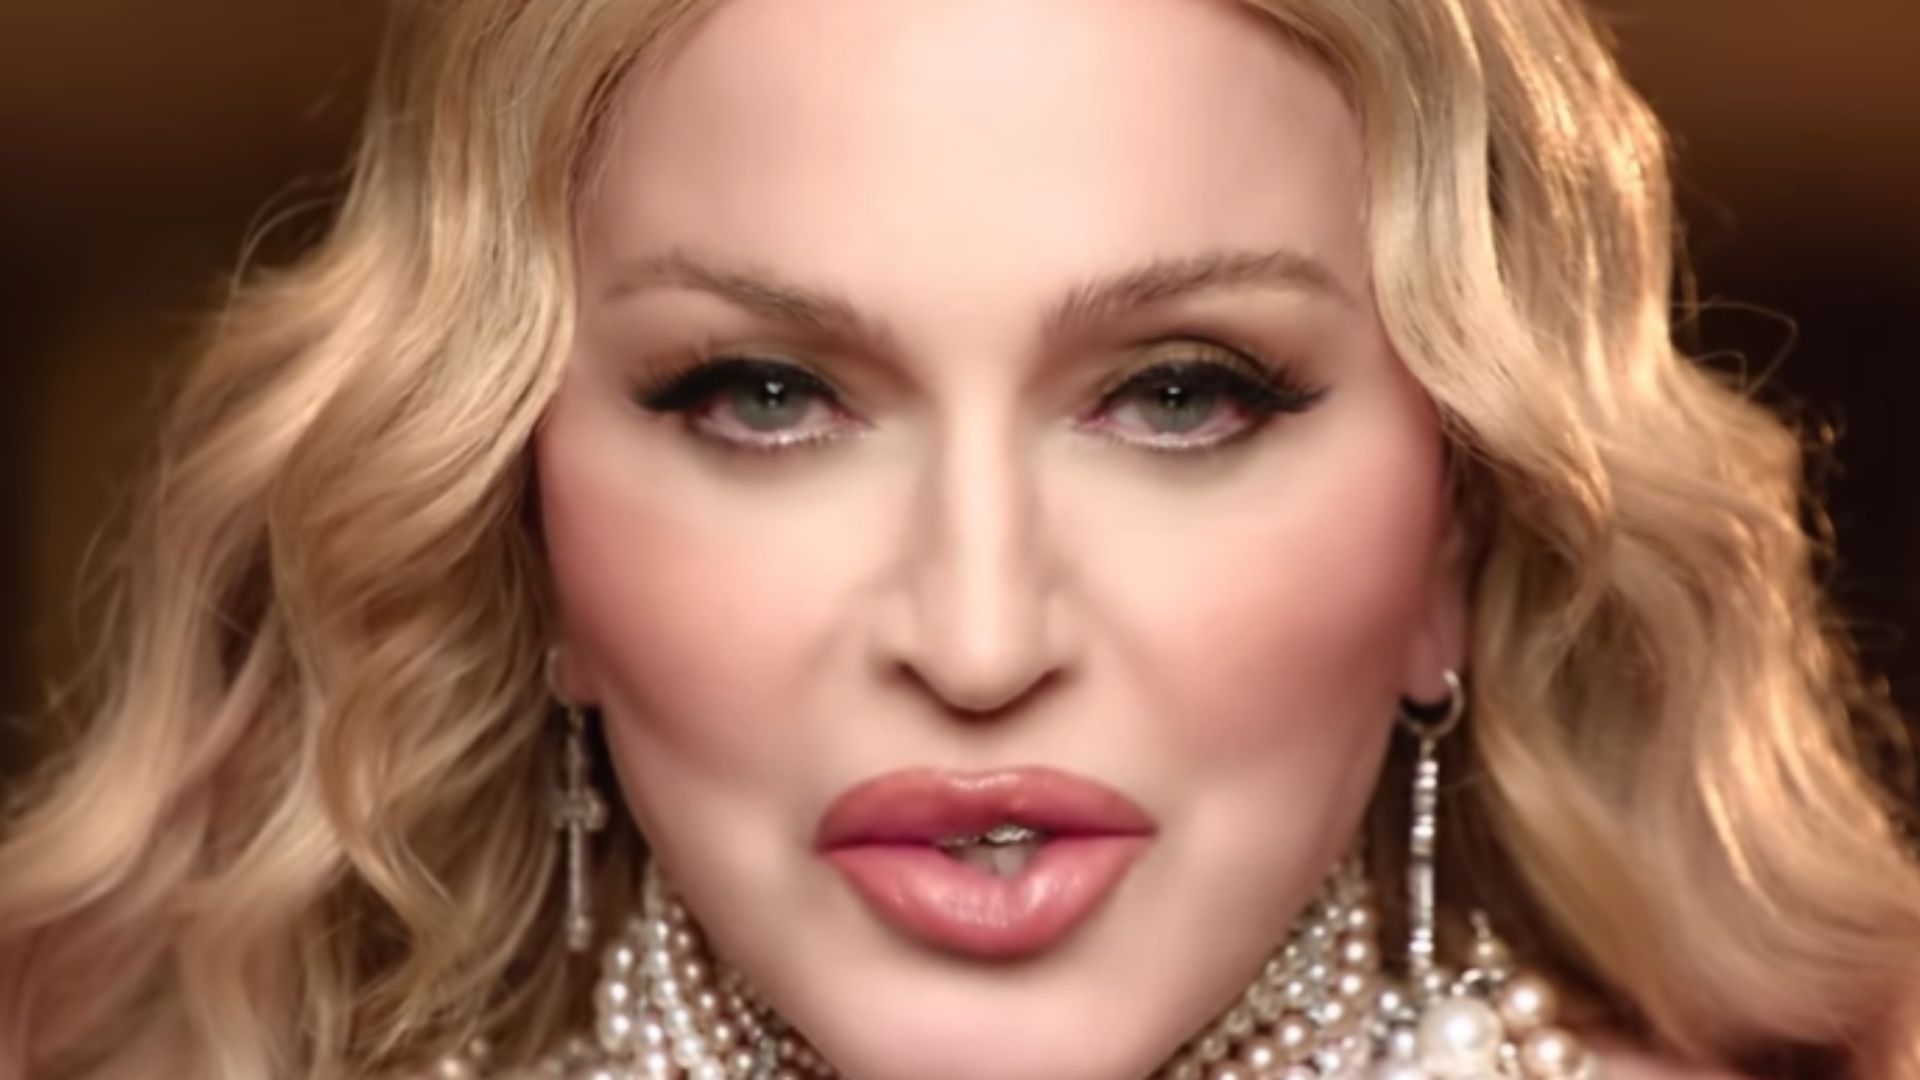 Madonna confirma vinda ao Brasil